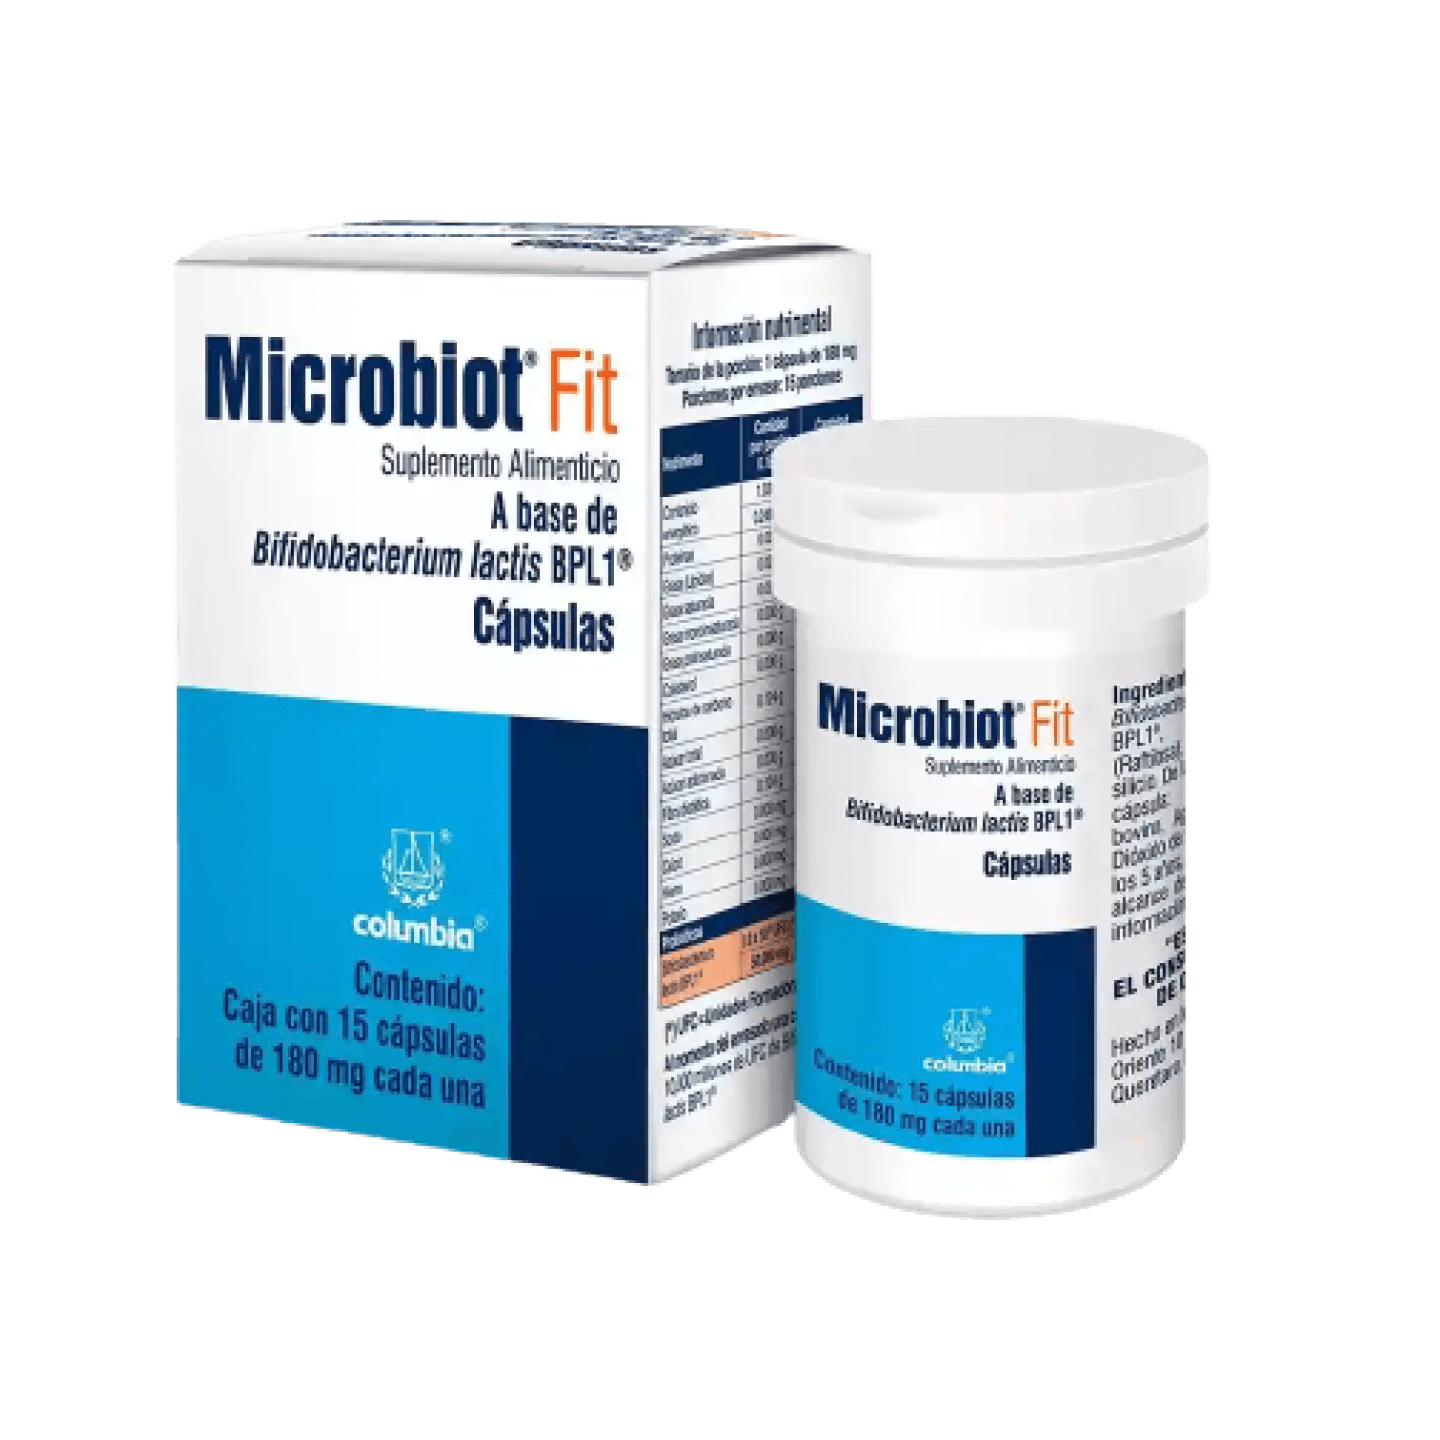 Microbiot Fit Suplemento Alimenticio (50 mg)- LIFE-